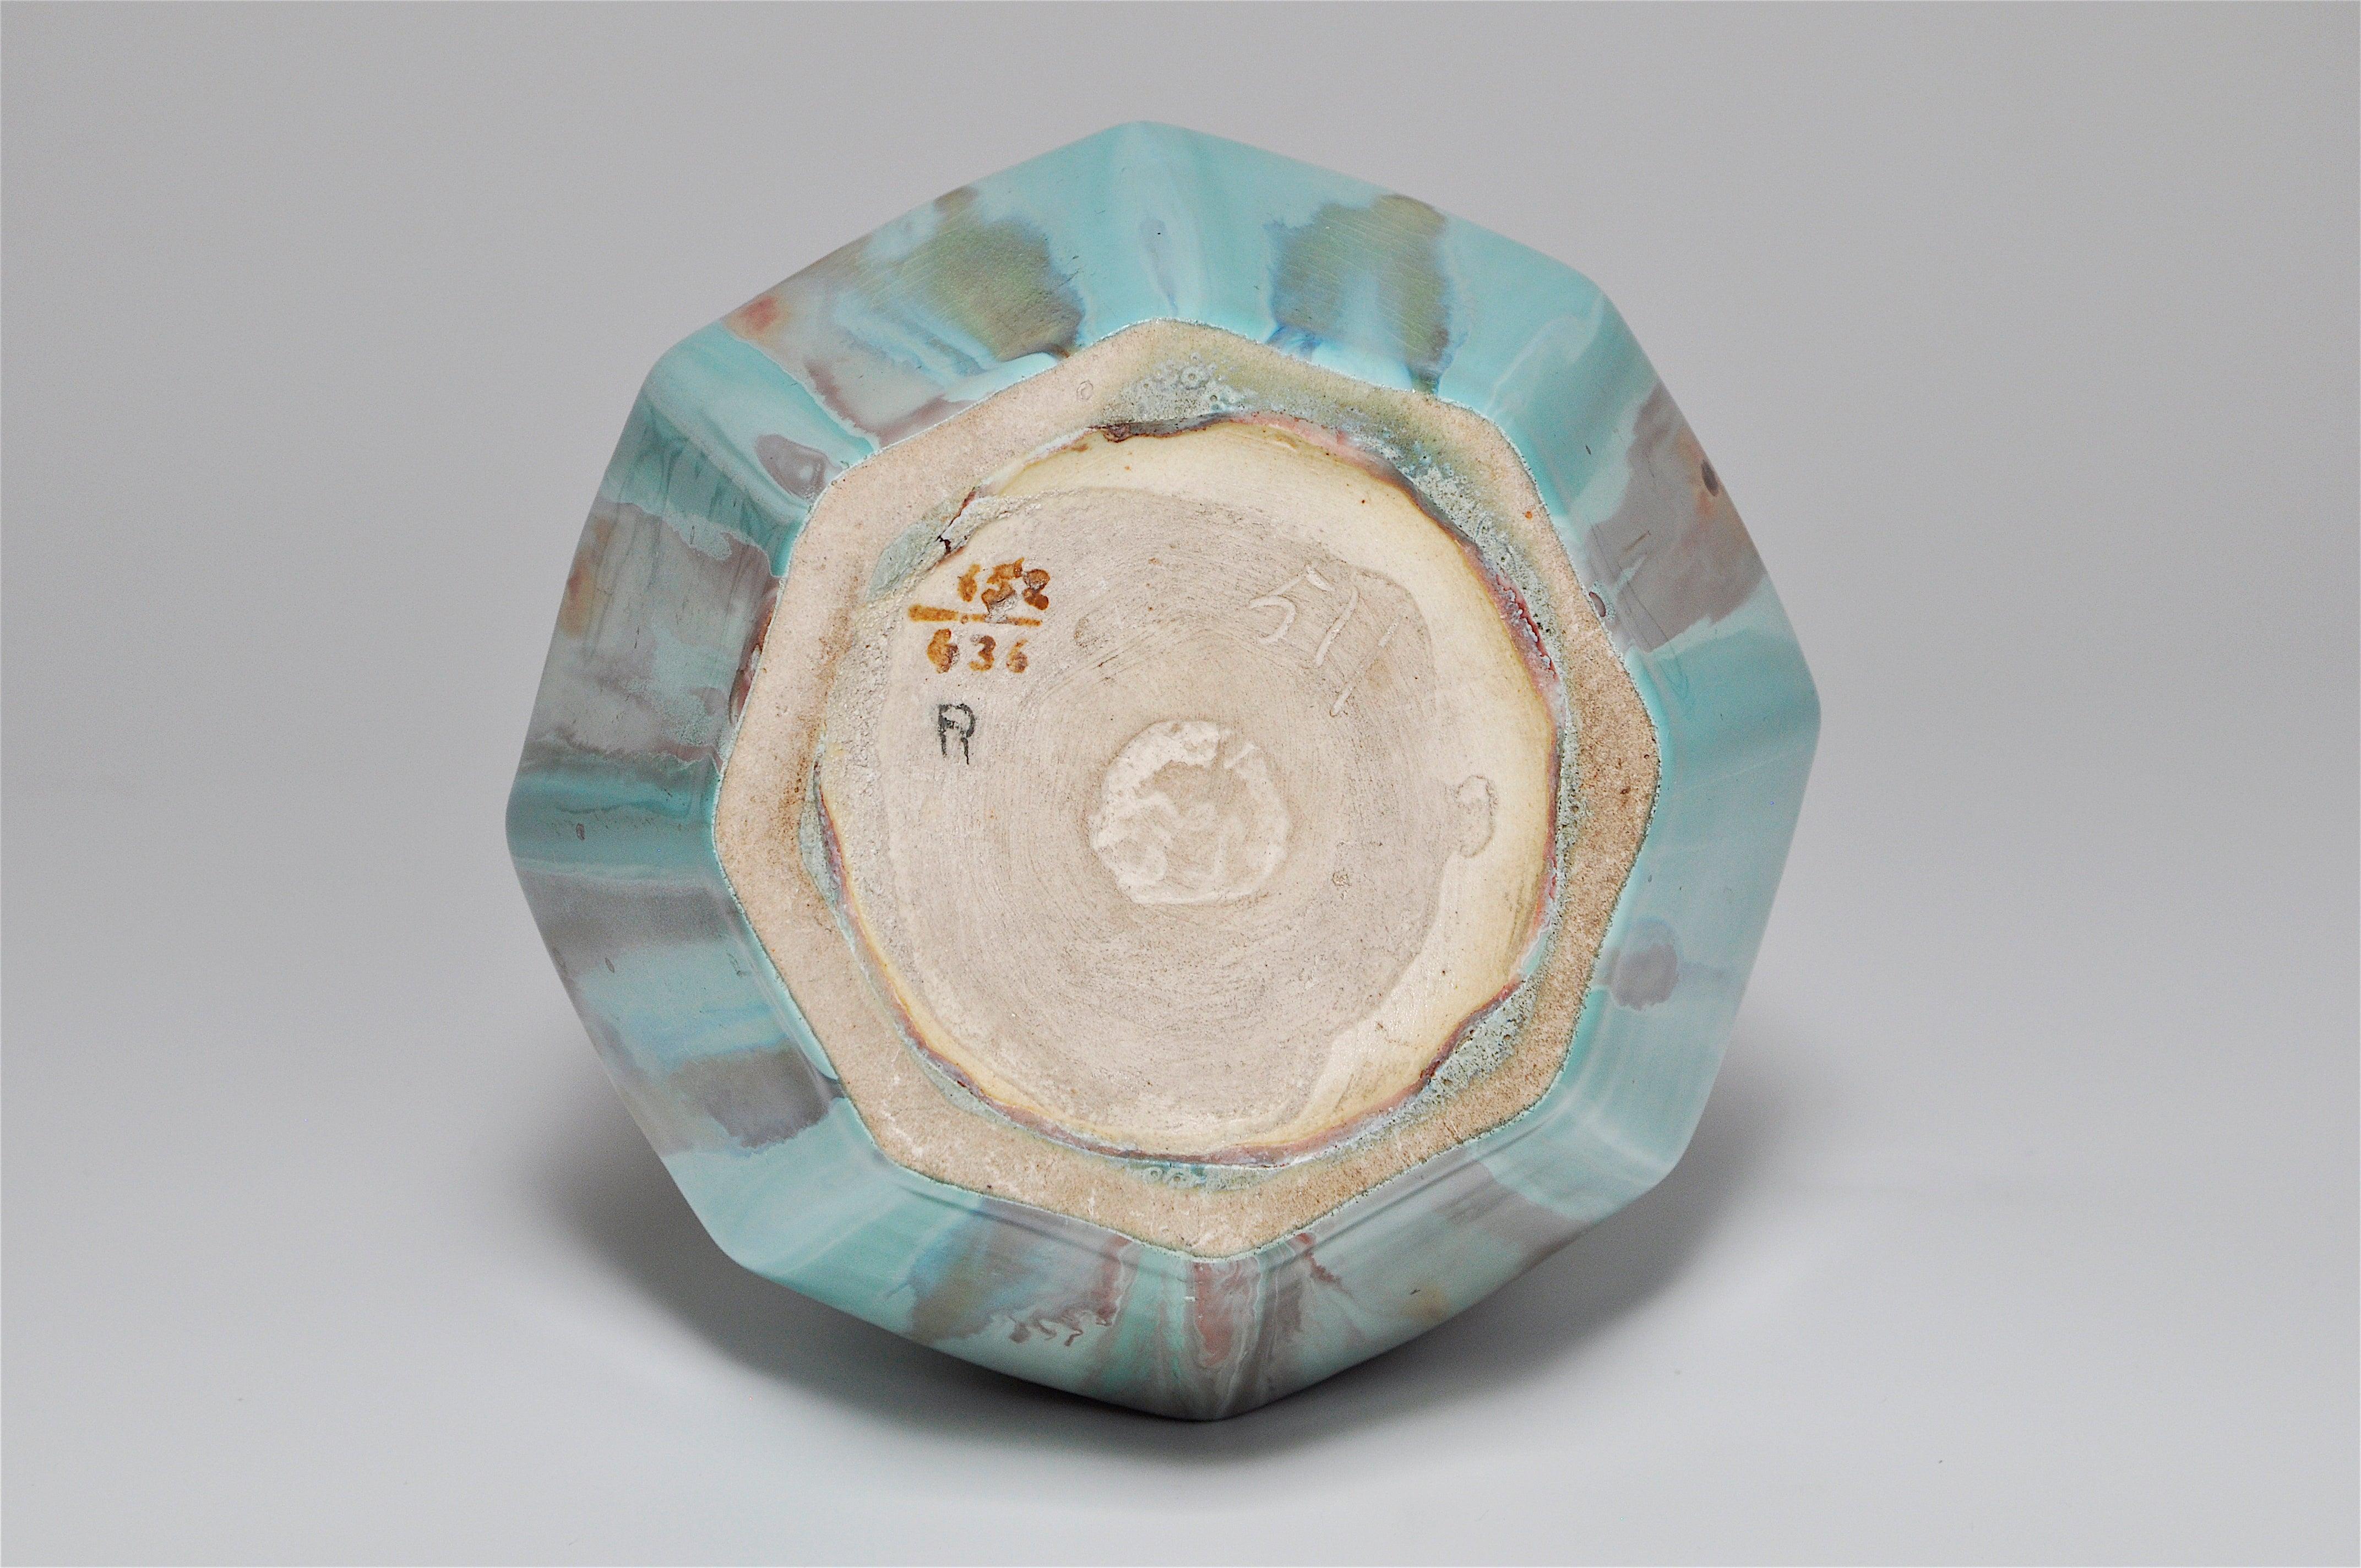 Rare French Art Deco Gabriel Fourmaintraux Desvres Pot Turquoise Ceramic Vase For Sale 2